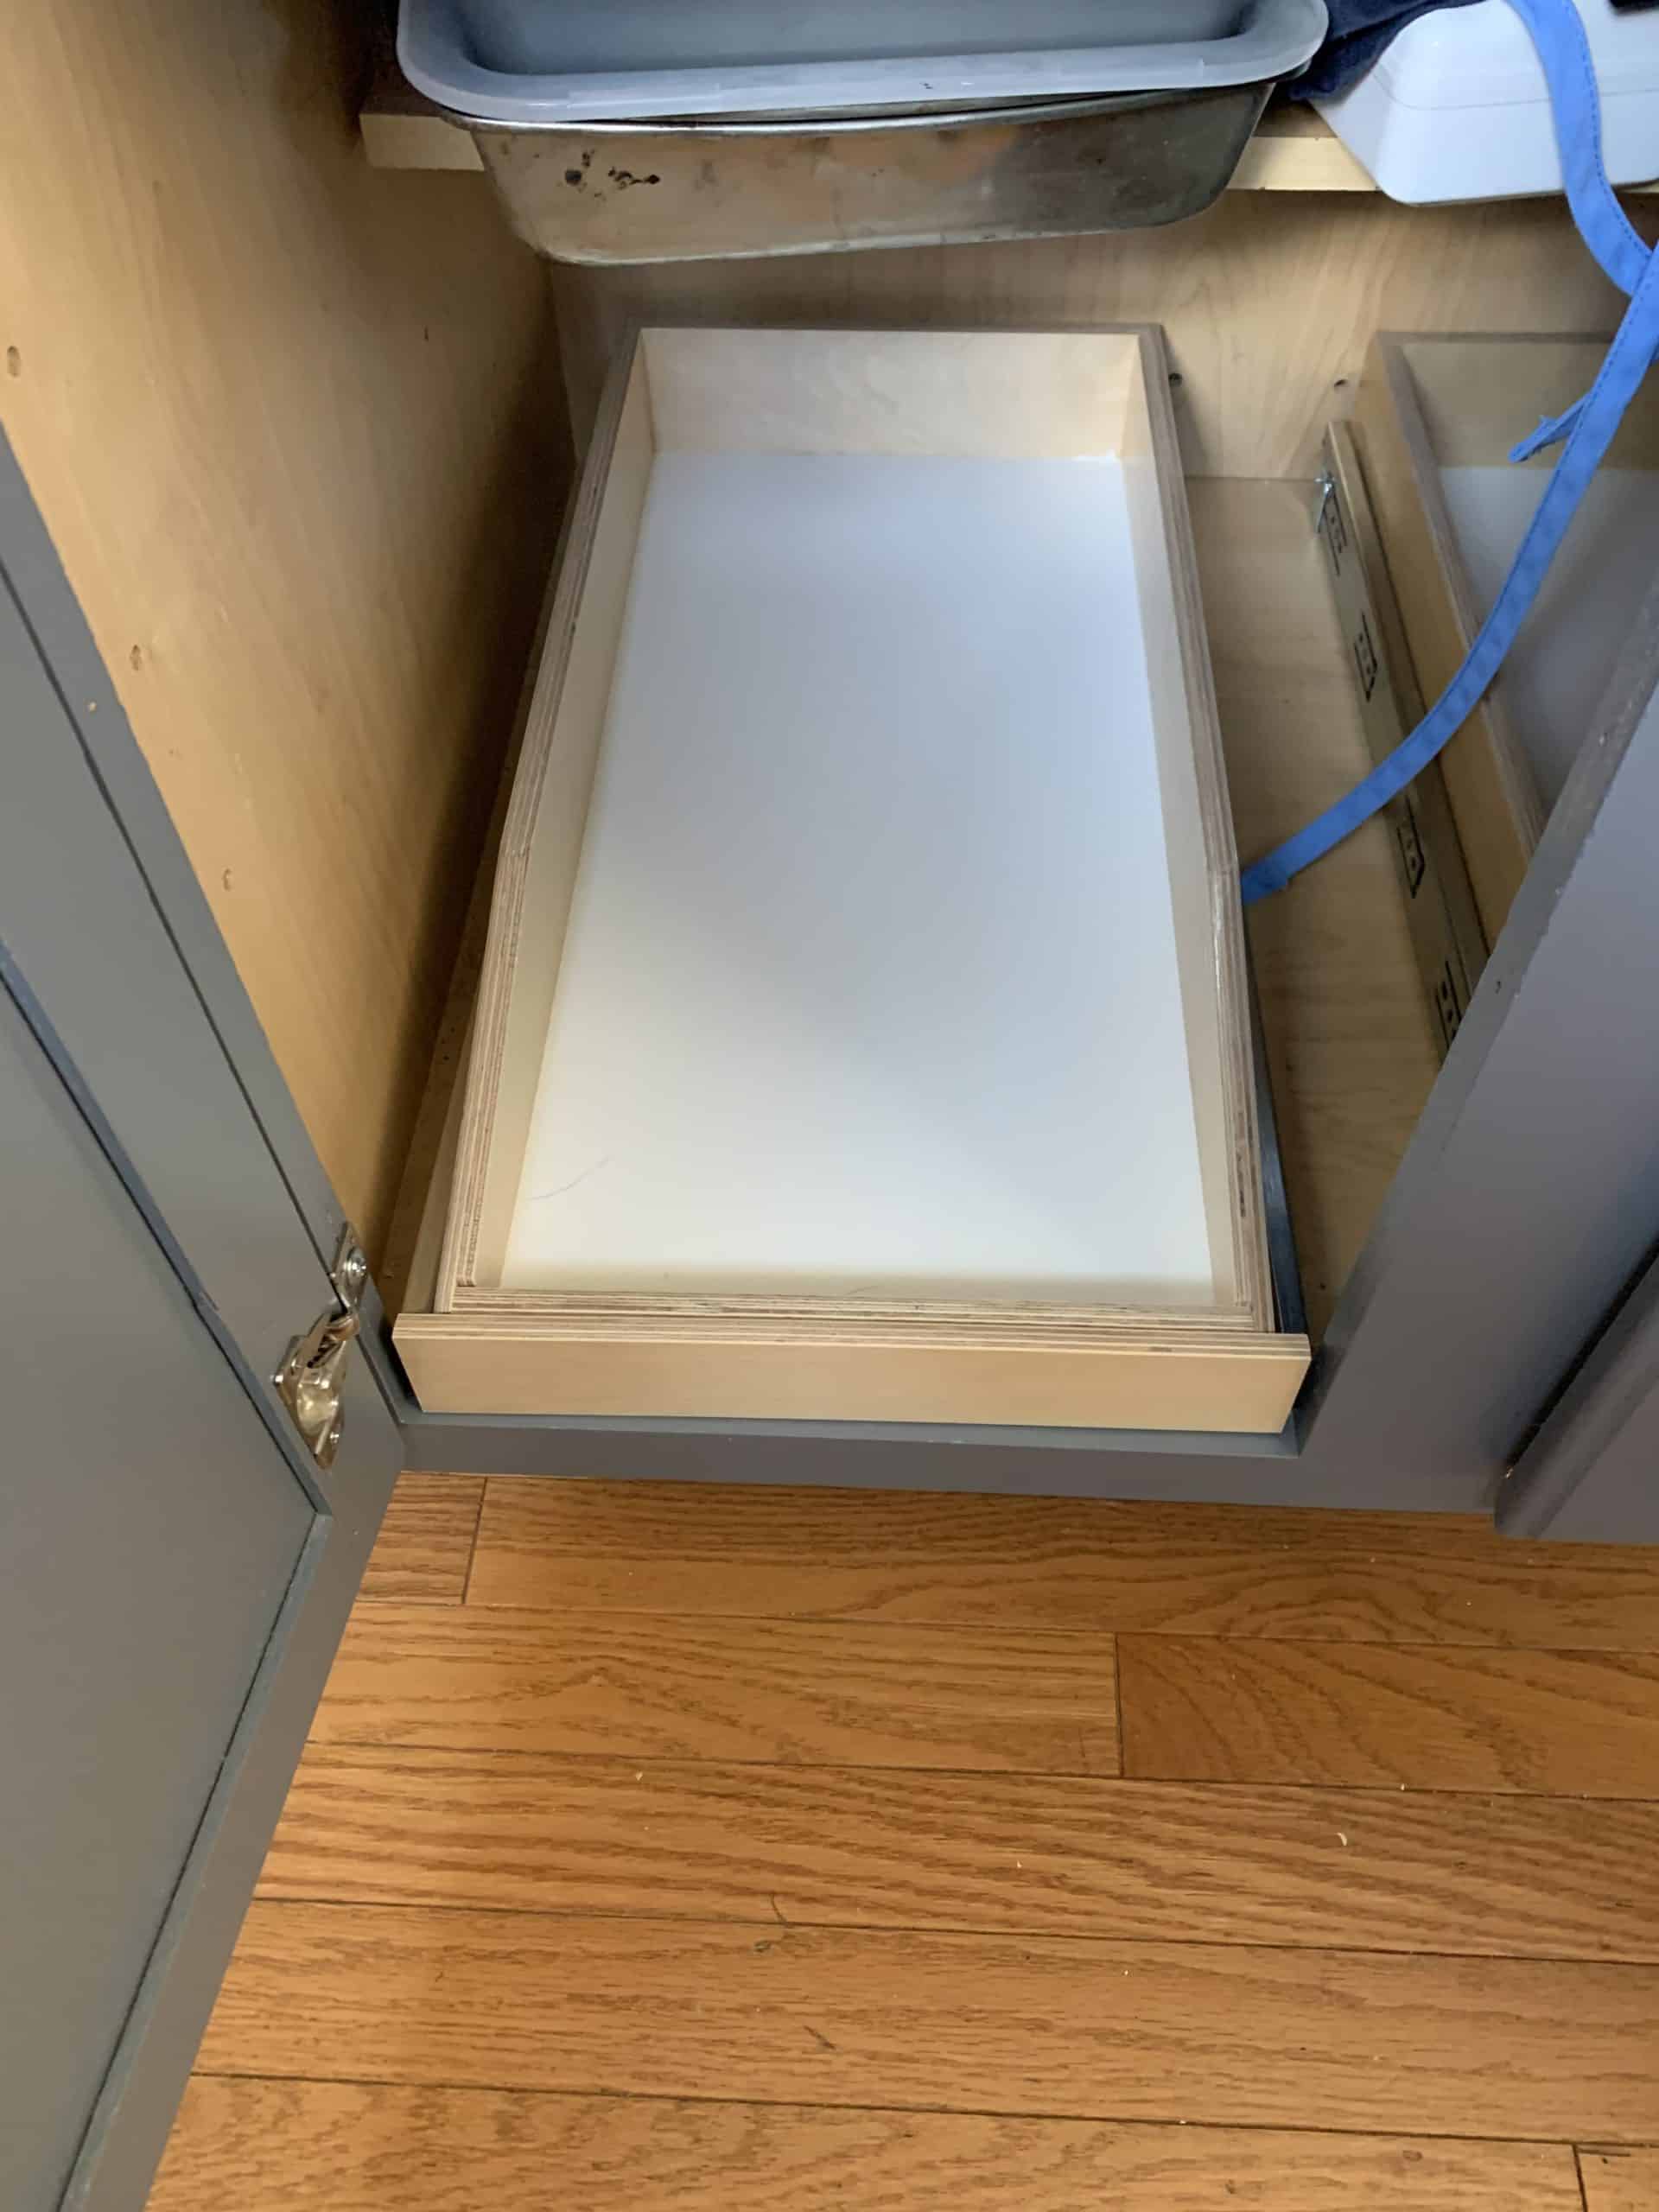 installing sliding shelf in kitchen cabinets